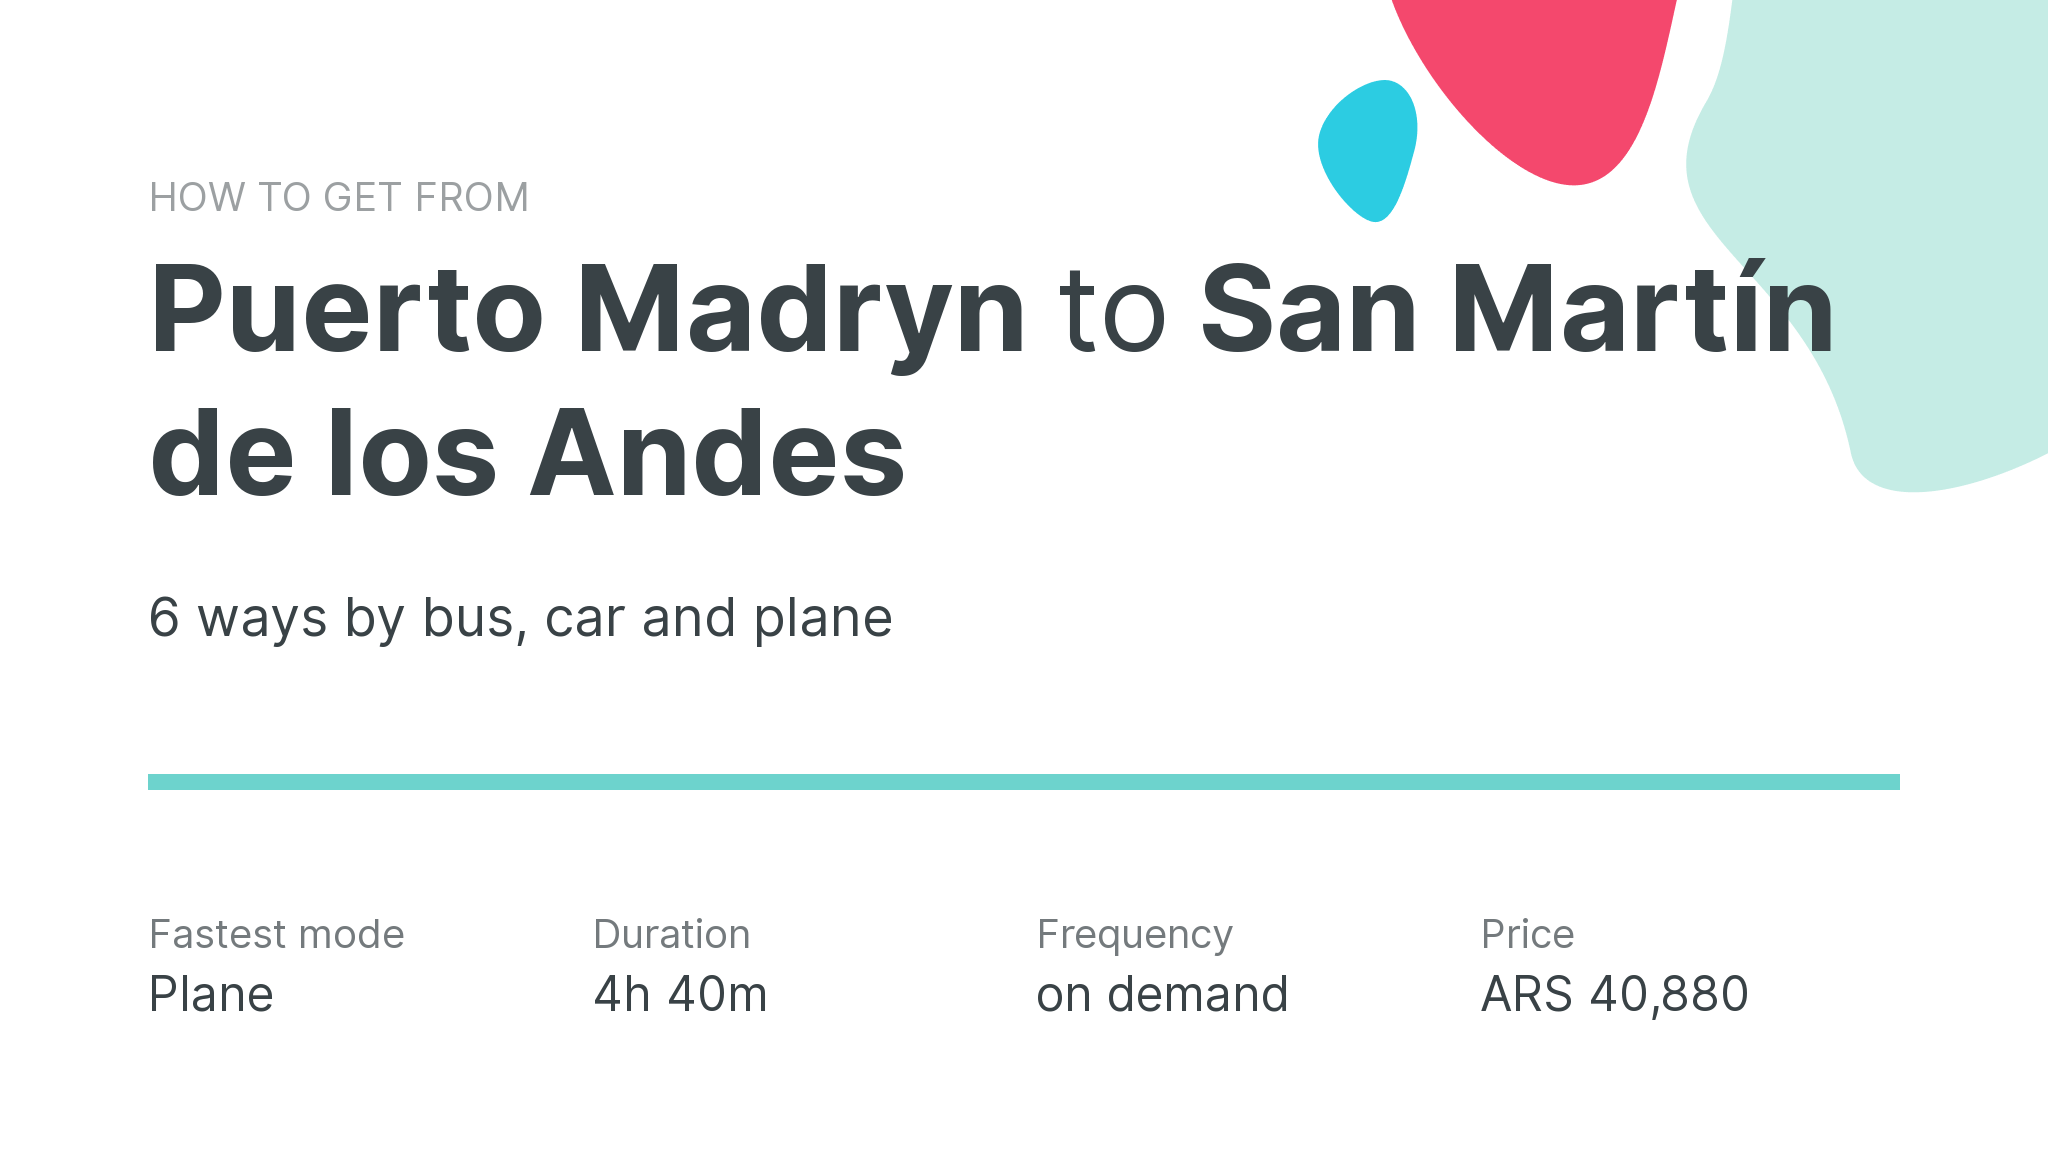 How do I get from Puerto Madryn to San Martín de los Andes